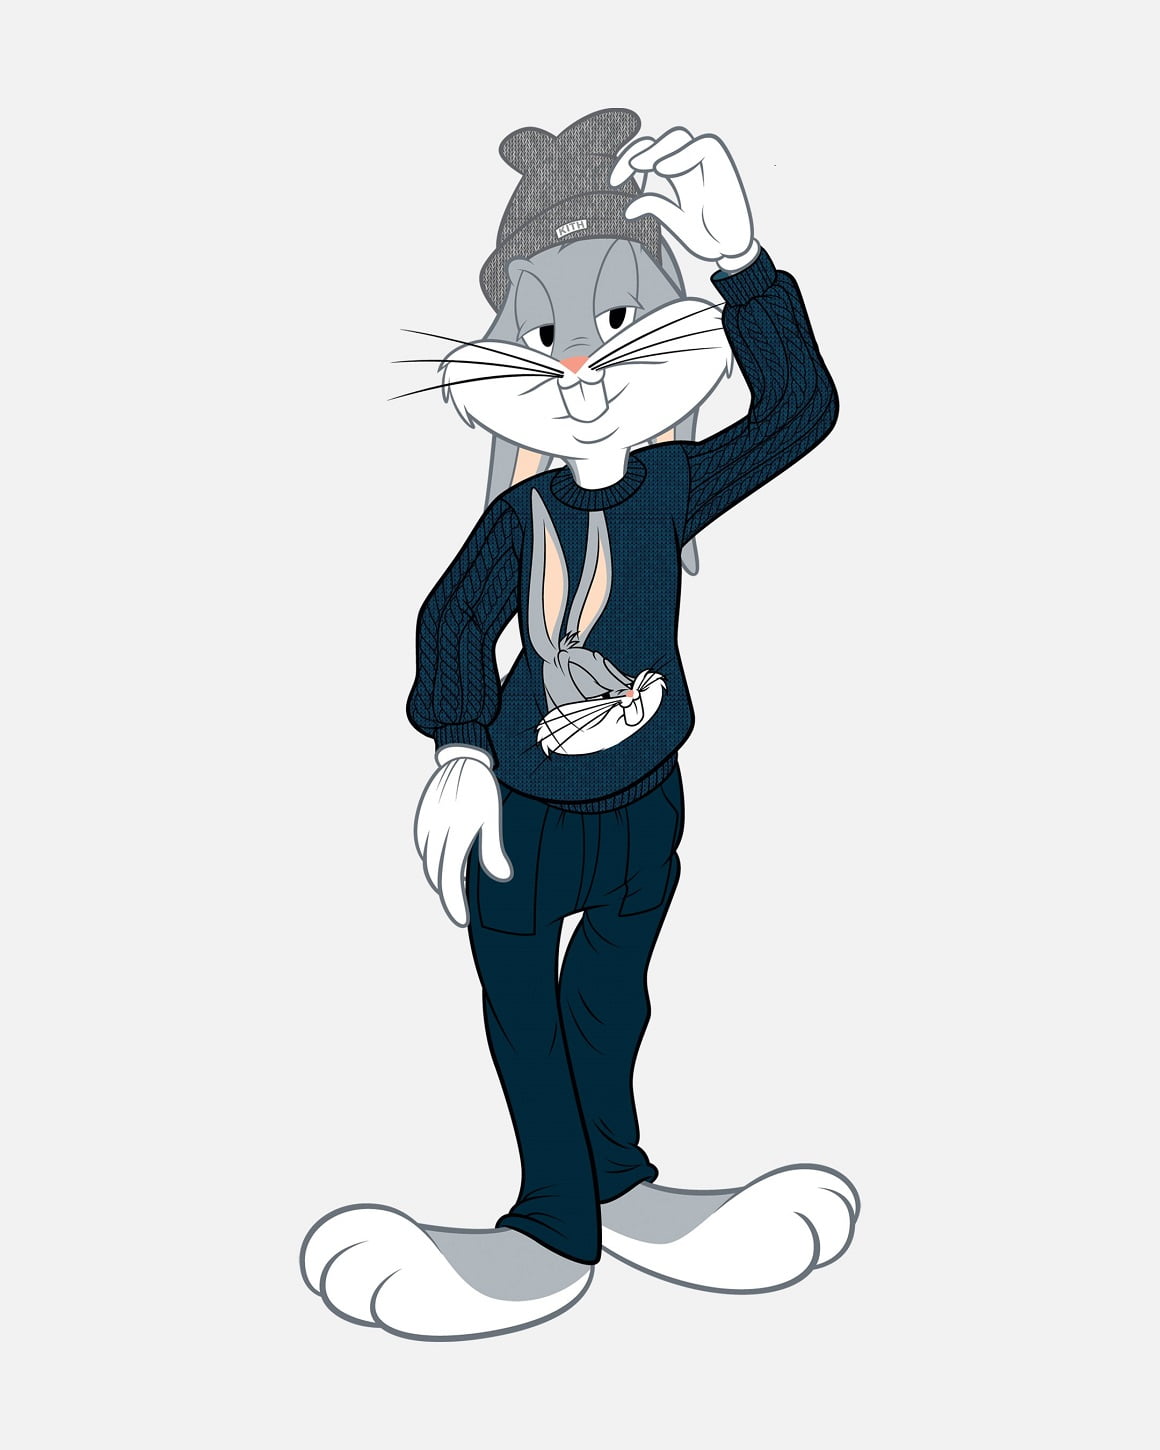 Bugs Bunny Stars In The Upcoming Kith X Looney Tunes Lookbook Klekt Blog